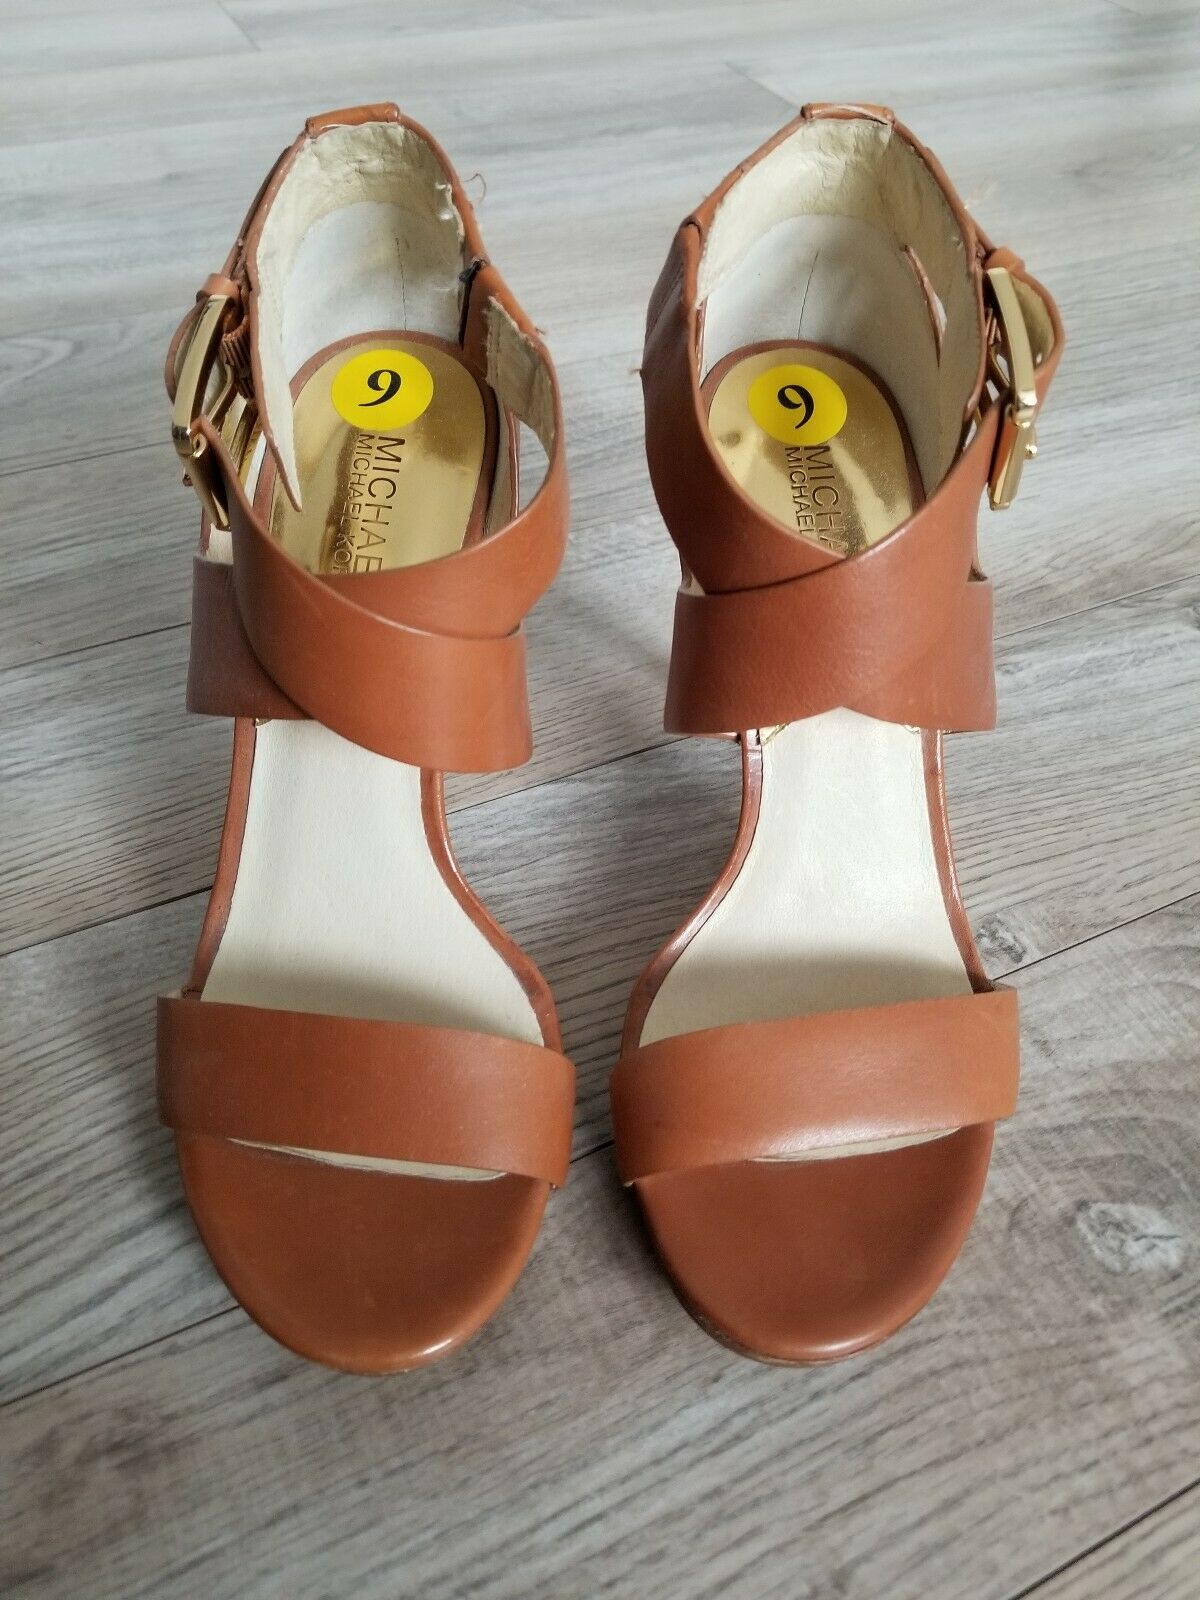 NEW Michael Kors Womens High Heel Stiletto Sandals Shoes Cognac Size 9